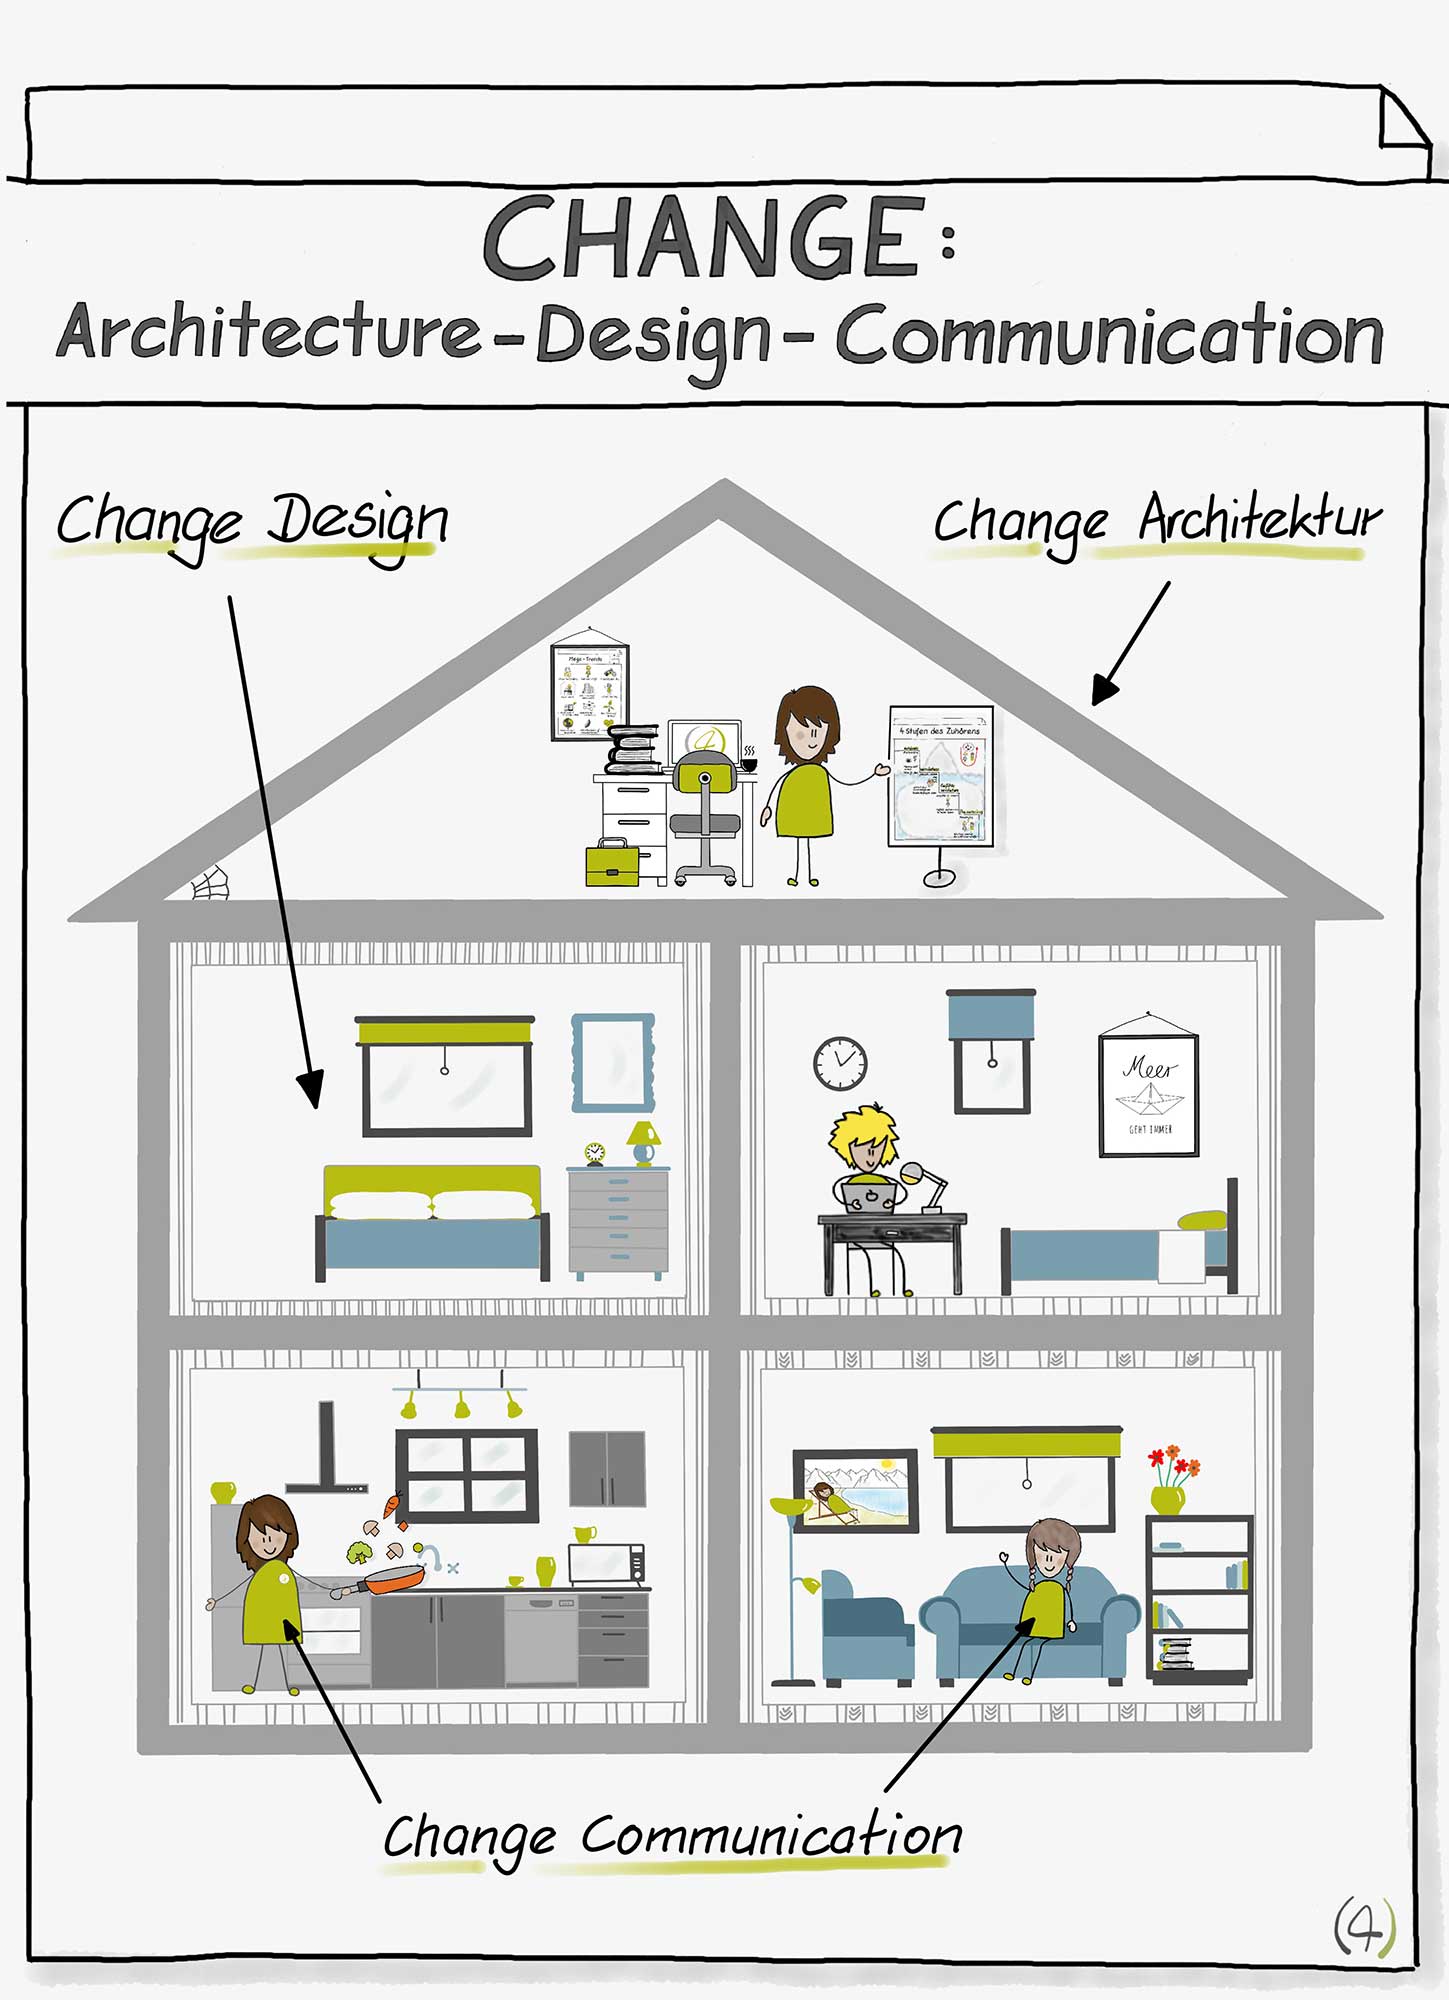 Change: Architecture - Design - Communication